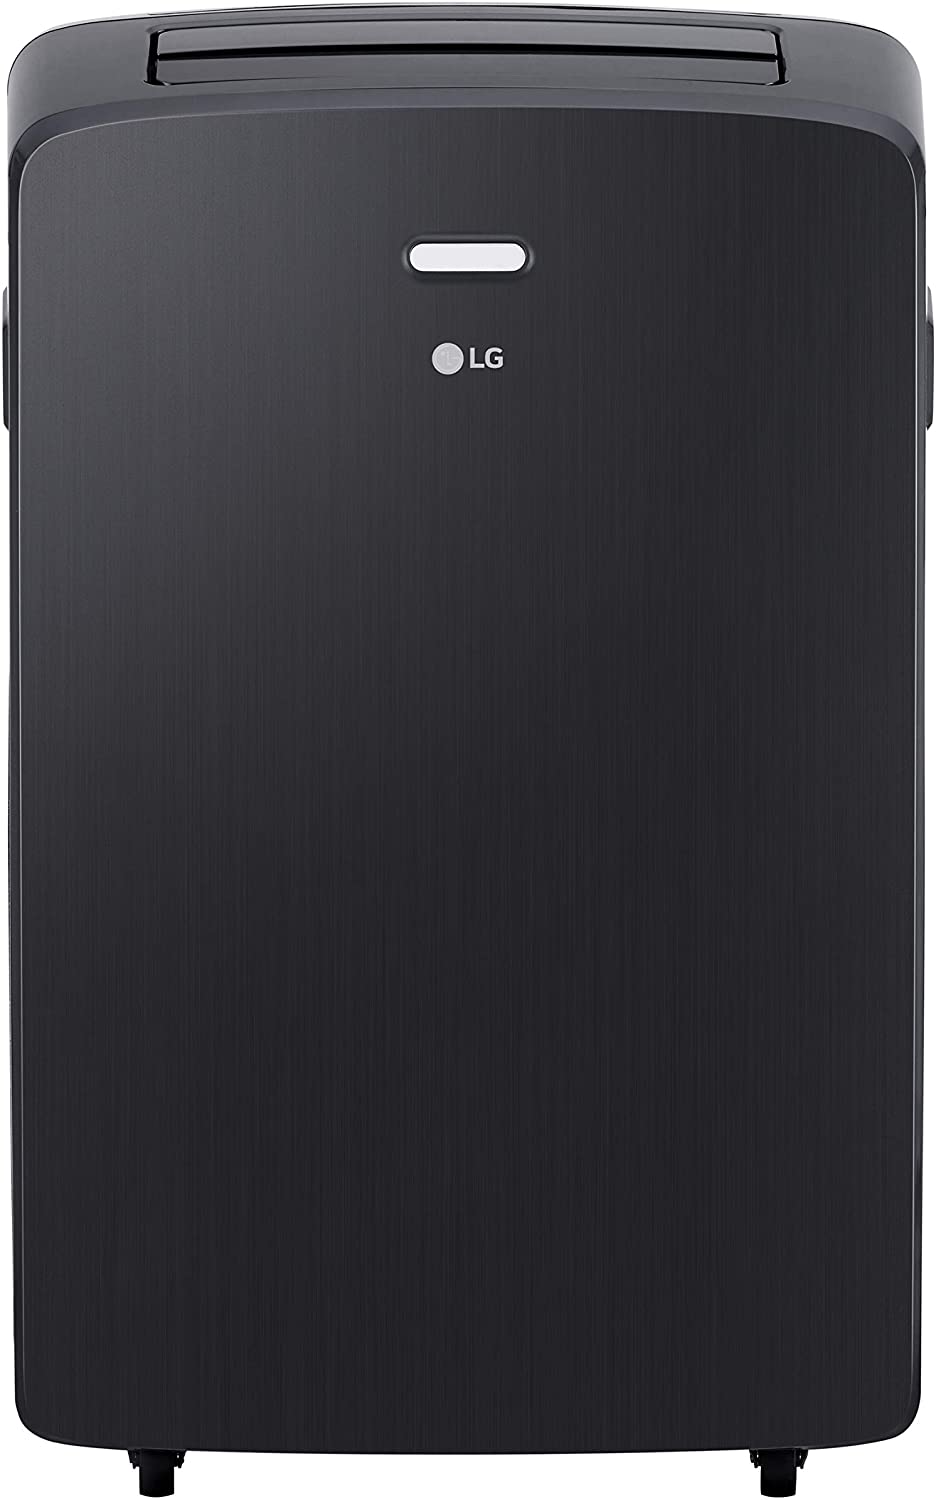 LG LP1217GSR 12,000 BTU Graphite Gray Portable Air Conditioner